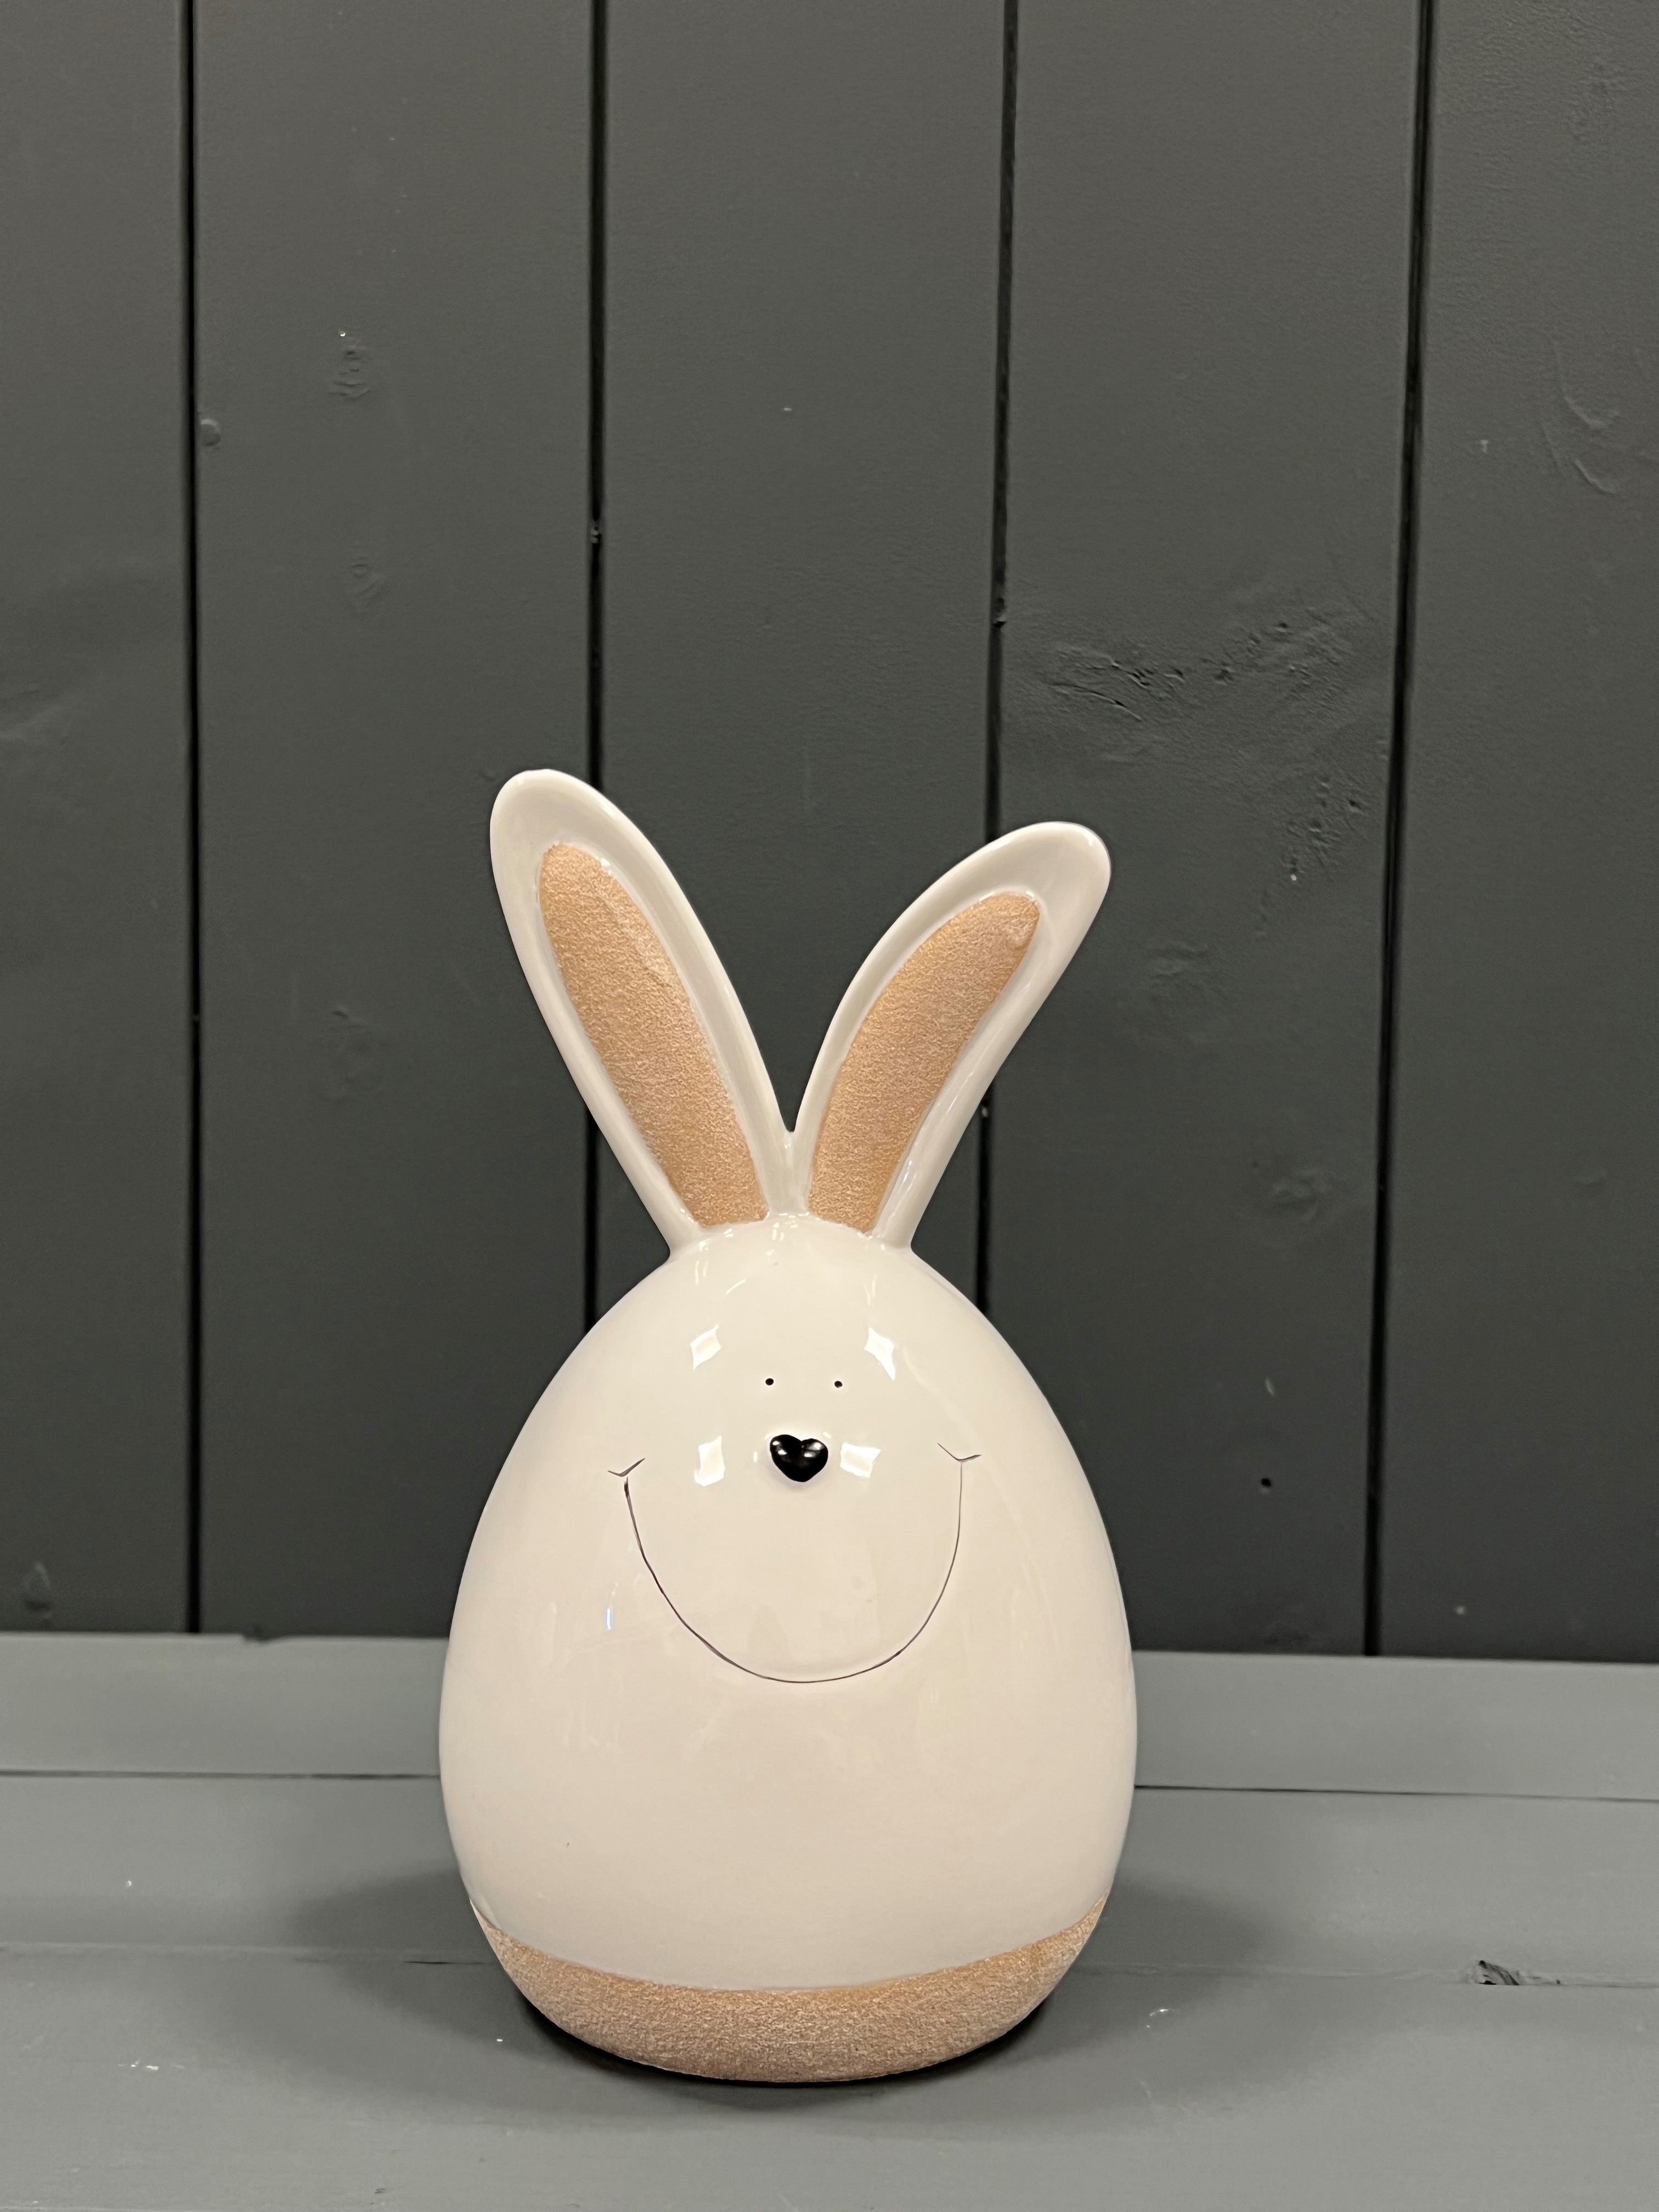 Medium Round Ceramic White Rabbit Ornament detail page